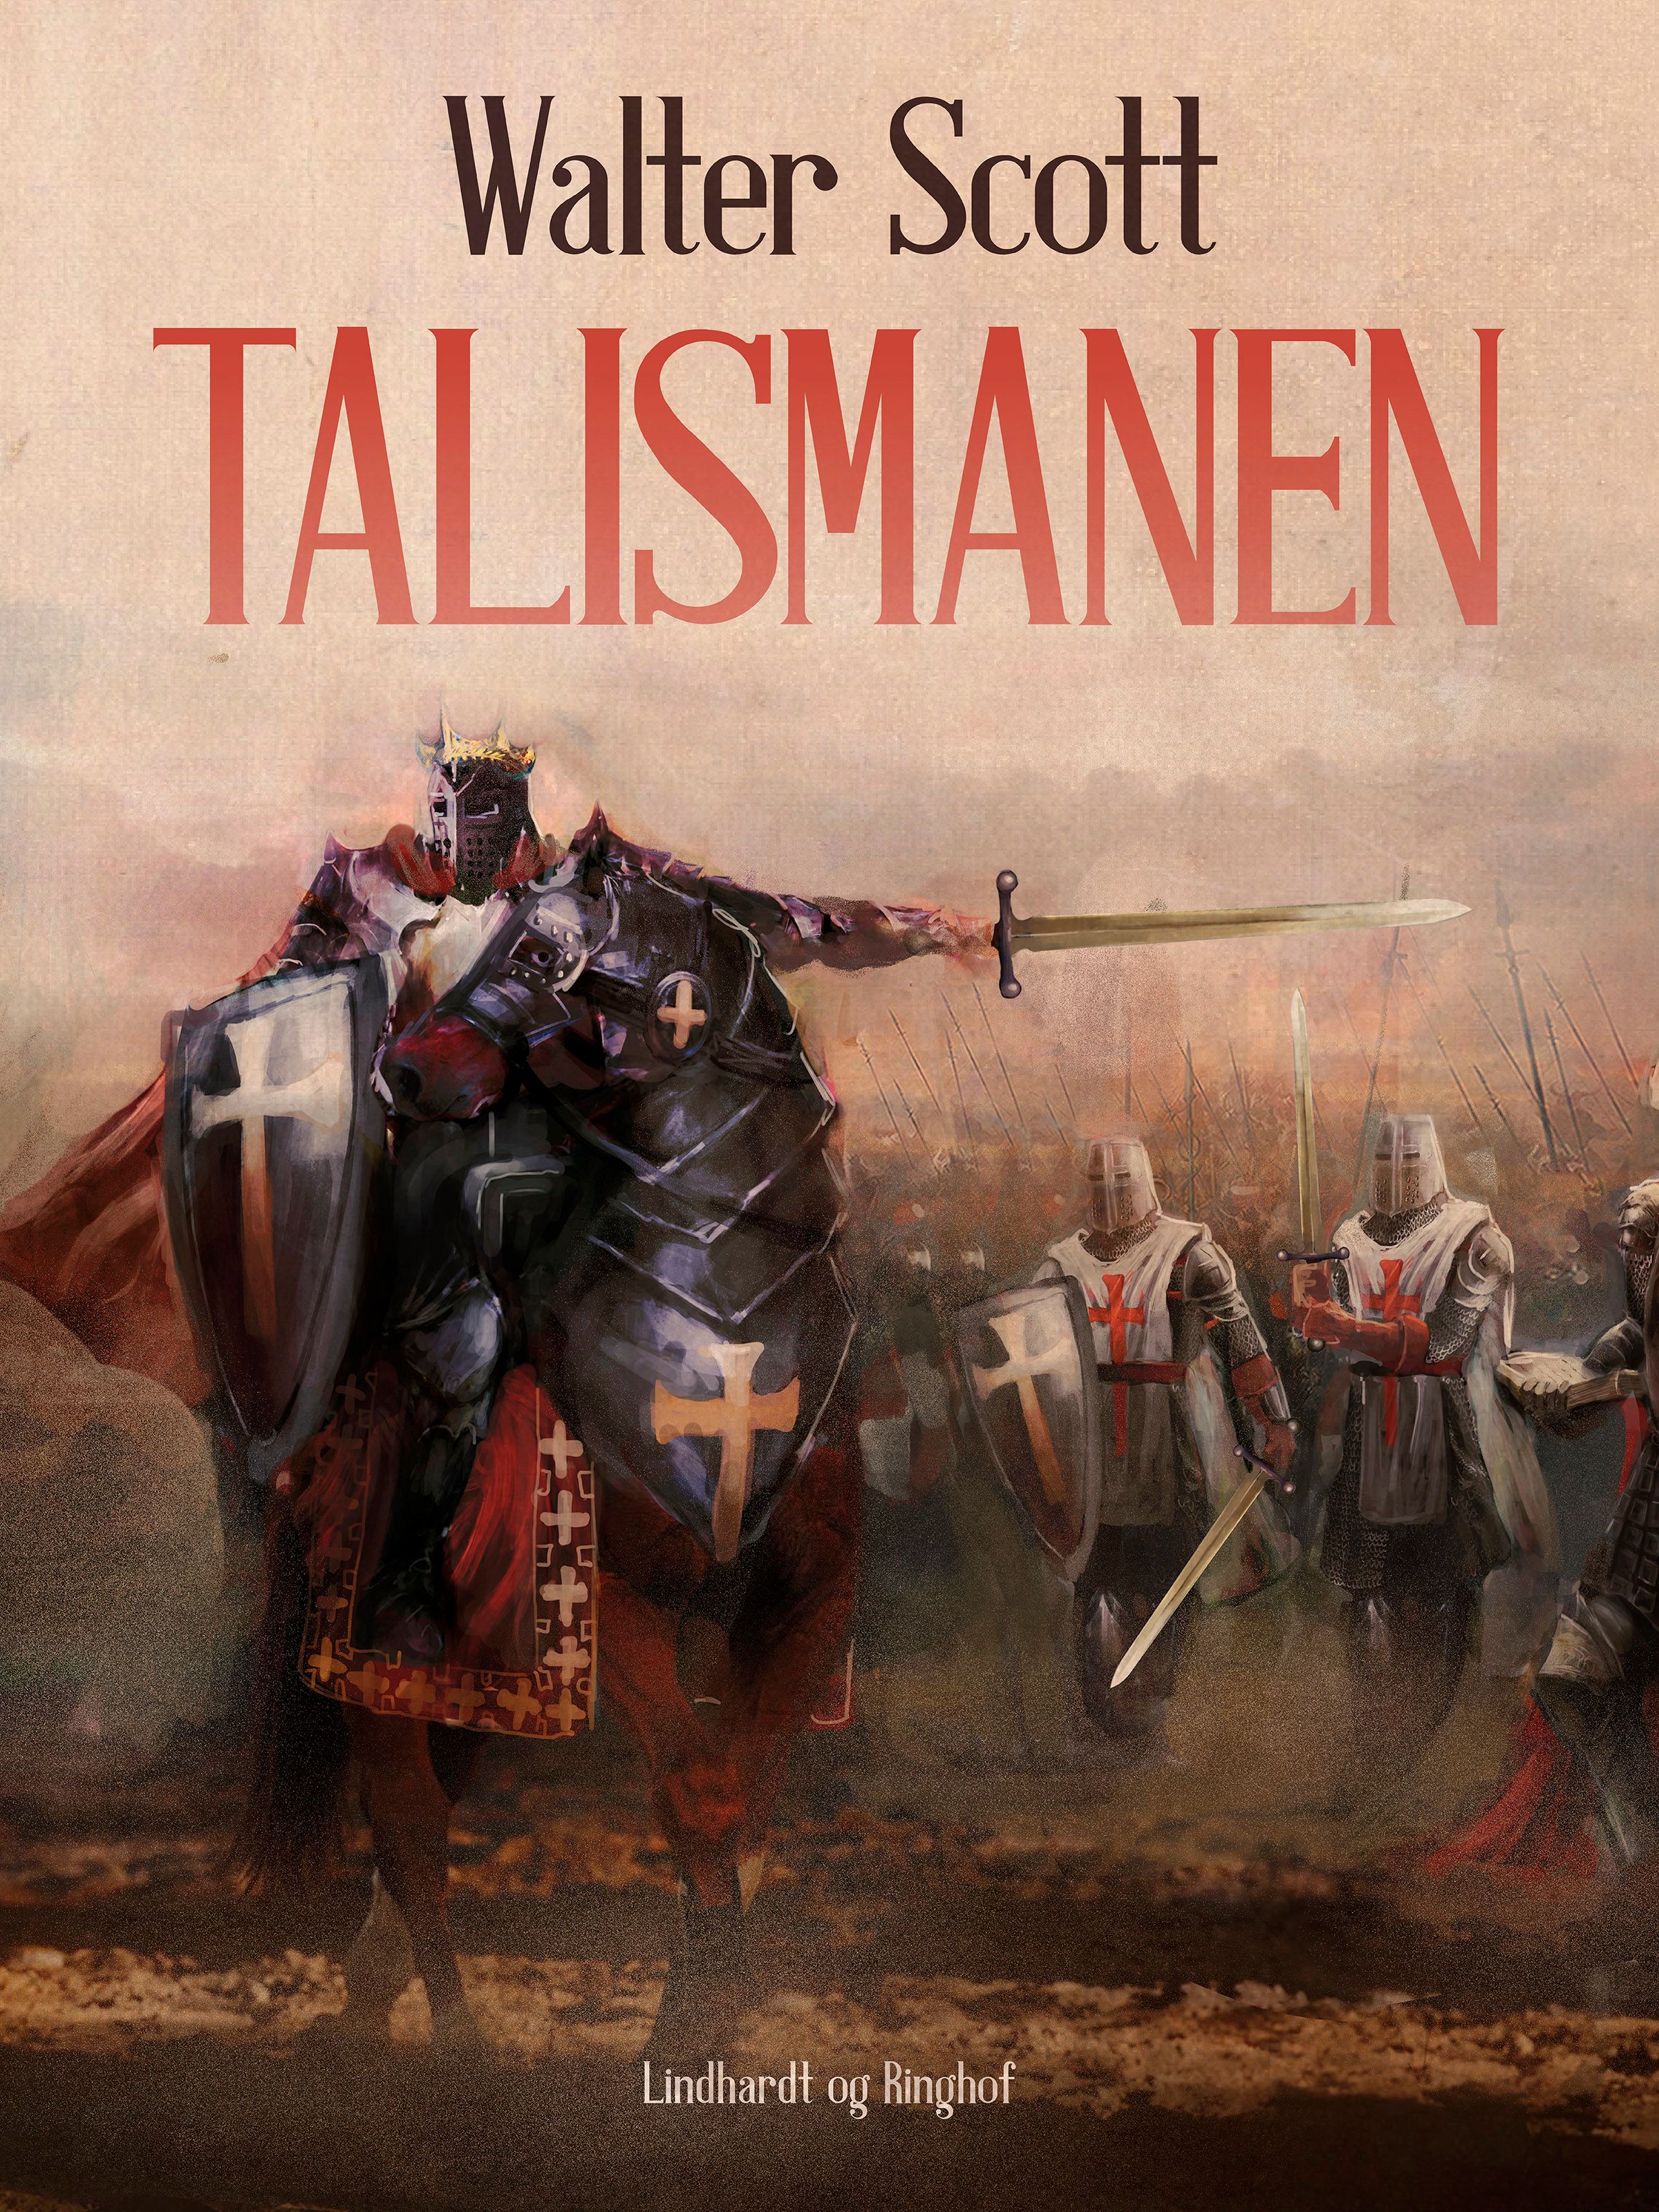 Talismanen, audiobook by Walter Scott